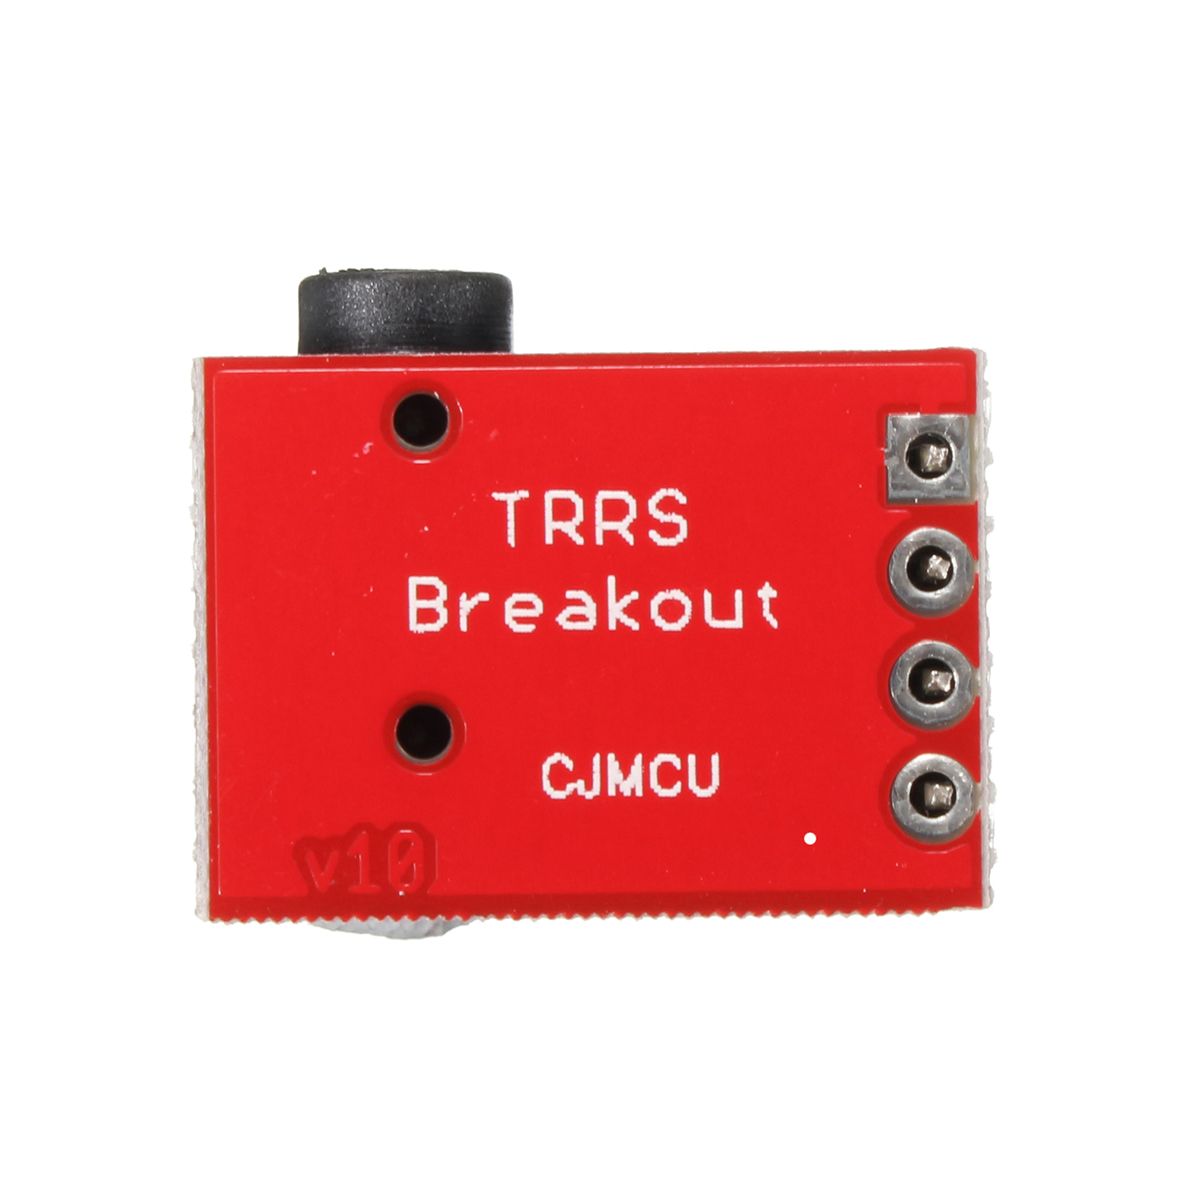 10pcs-35mm-Plug-Jack-Stereo-TRRS-Headset-Audio-Socket-Breakout-Board-Extension-Module-1405162